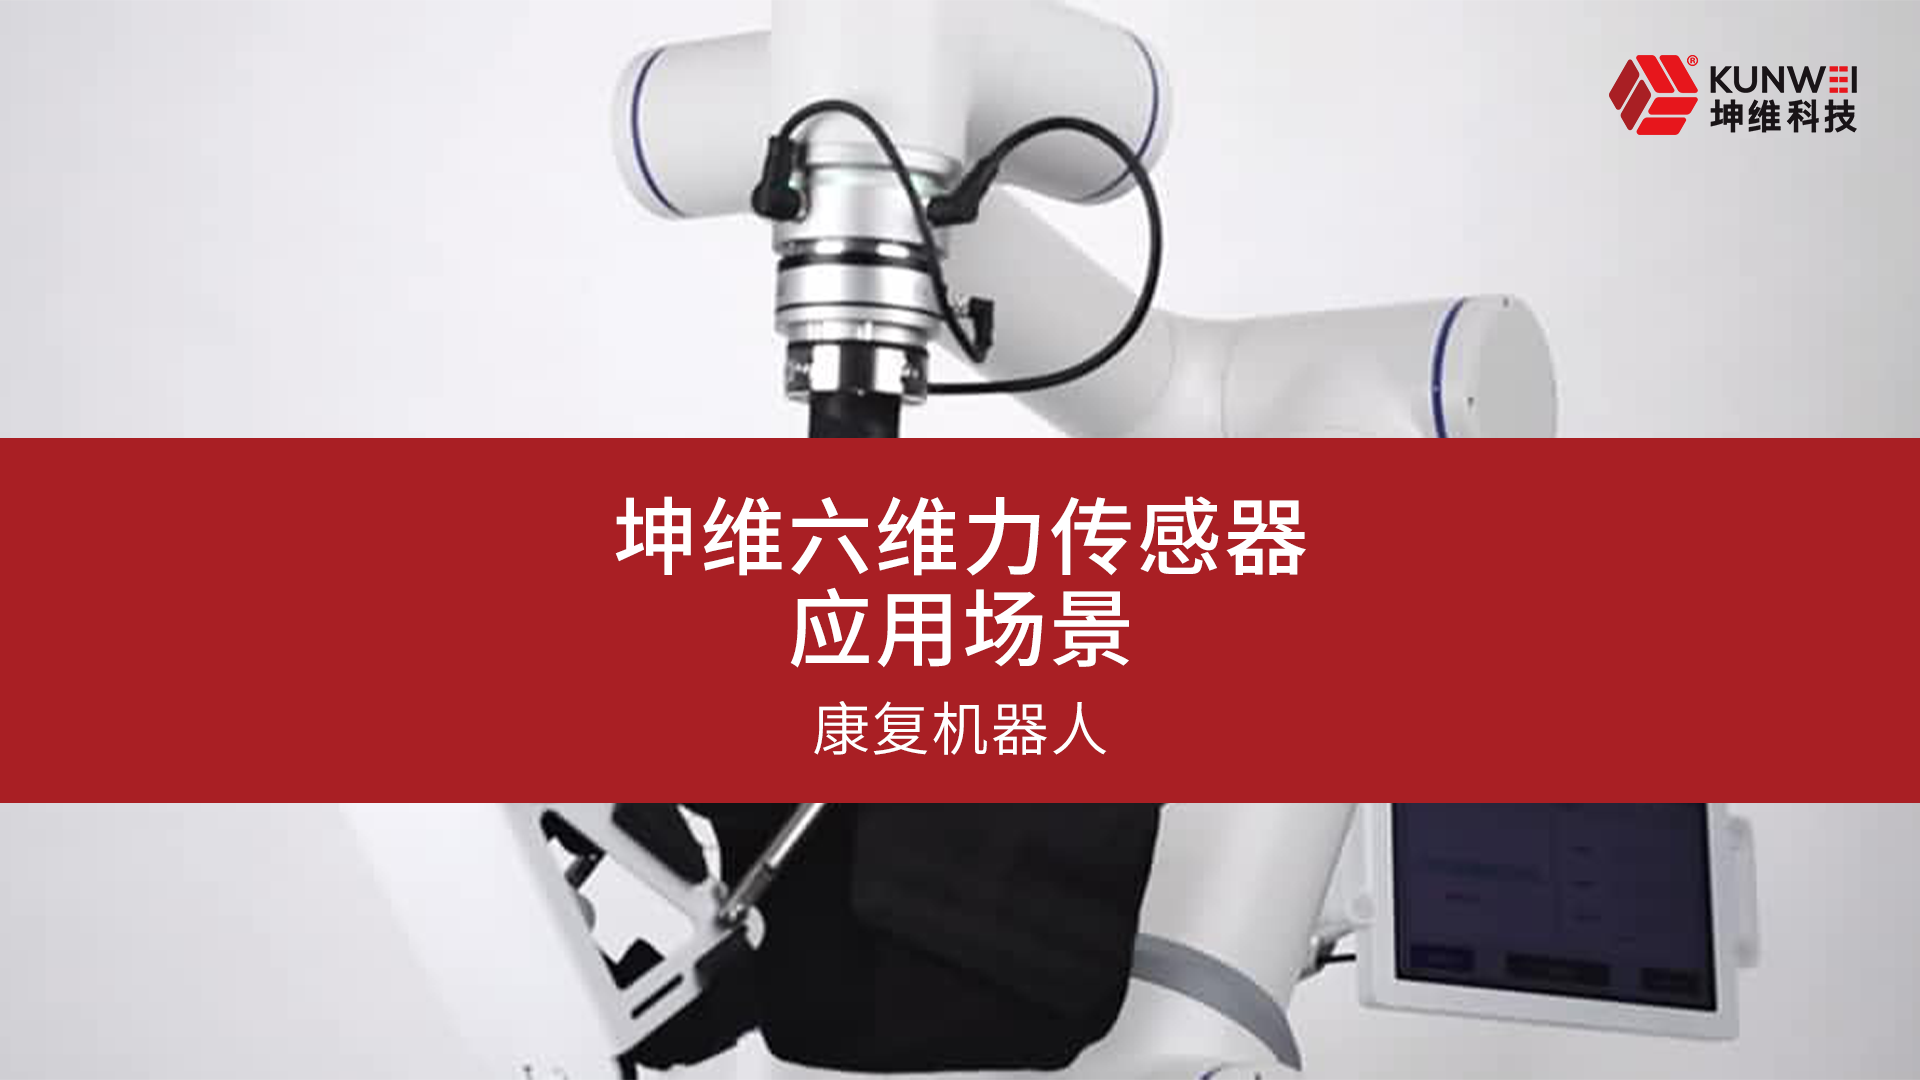 304am永利集团(中国)有限公司-Official Website_活动7180